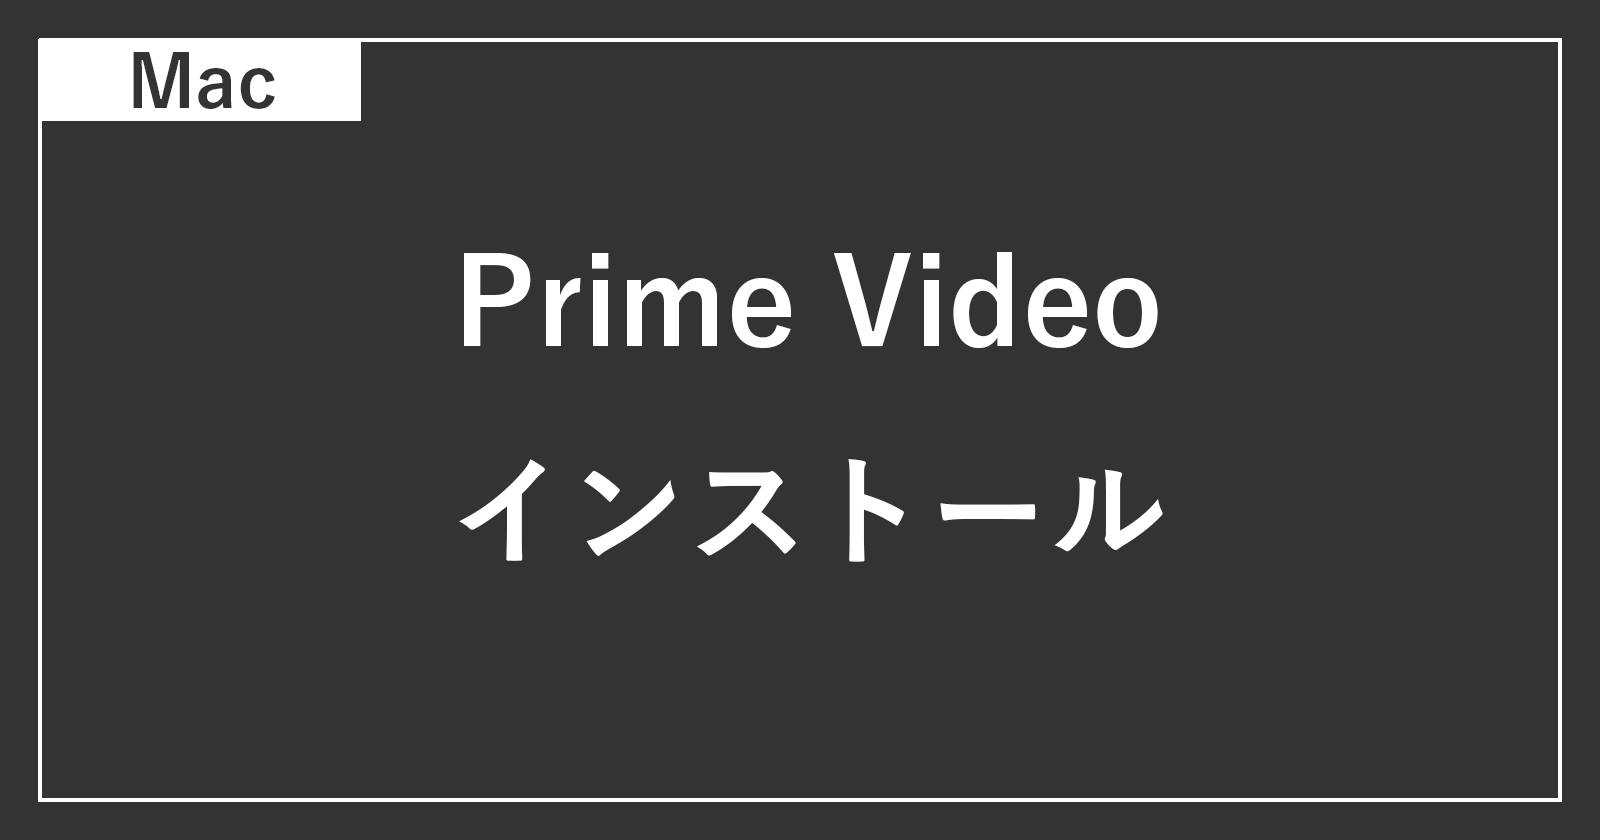 mac prime video install